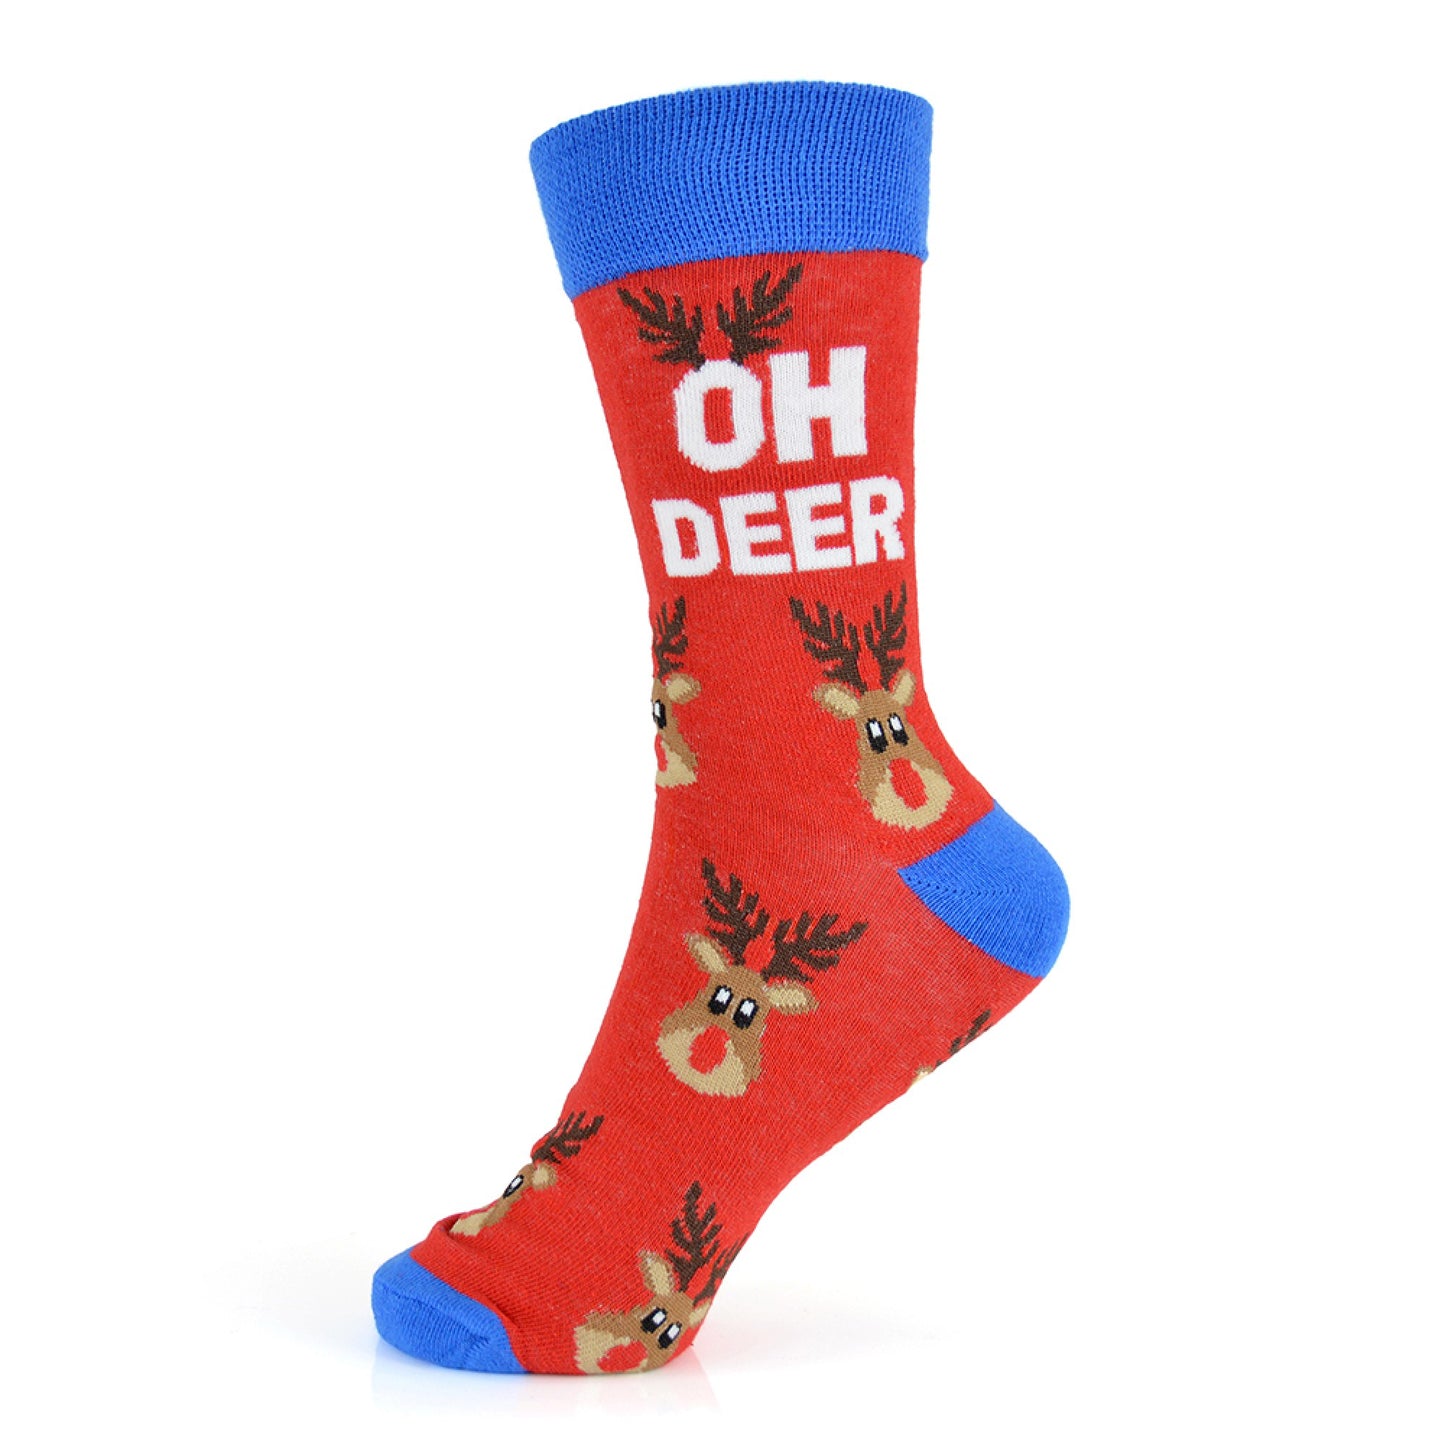 4 Pairs Mens Christmas Patterned Cotton Rich Socks Festive Designs